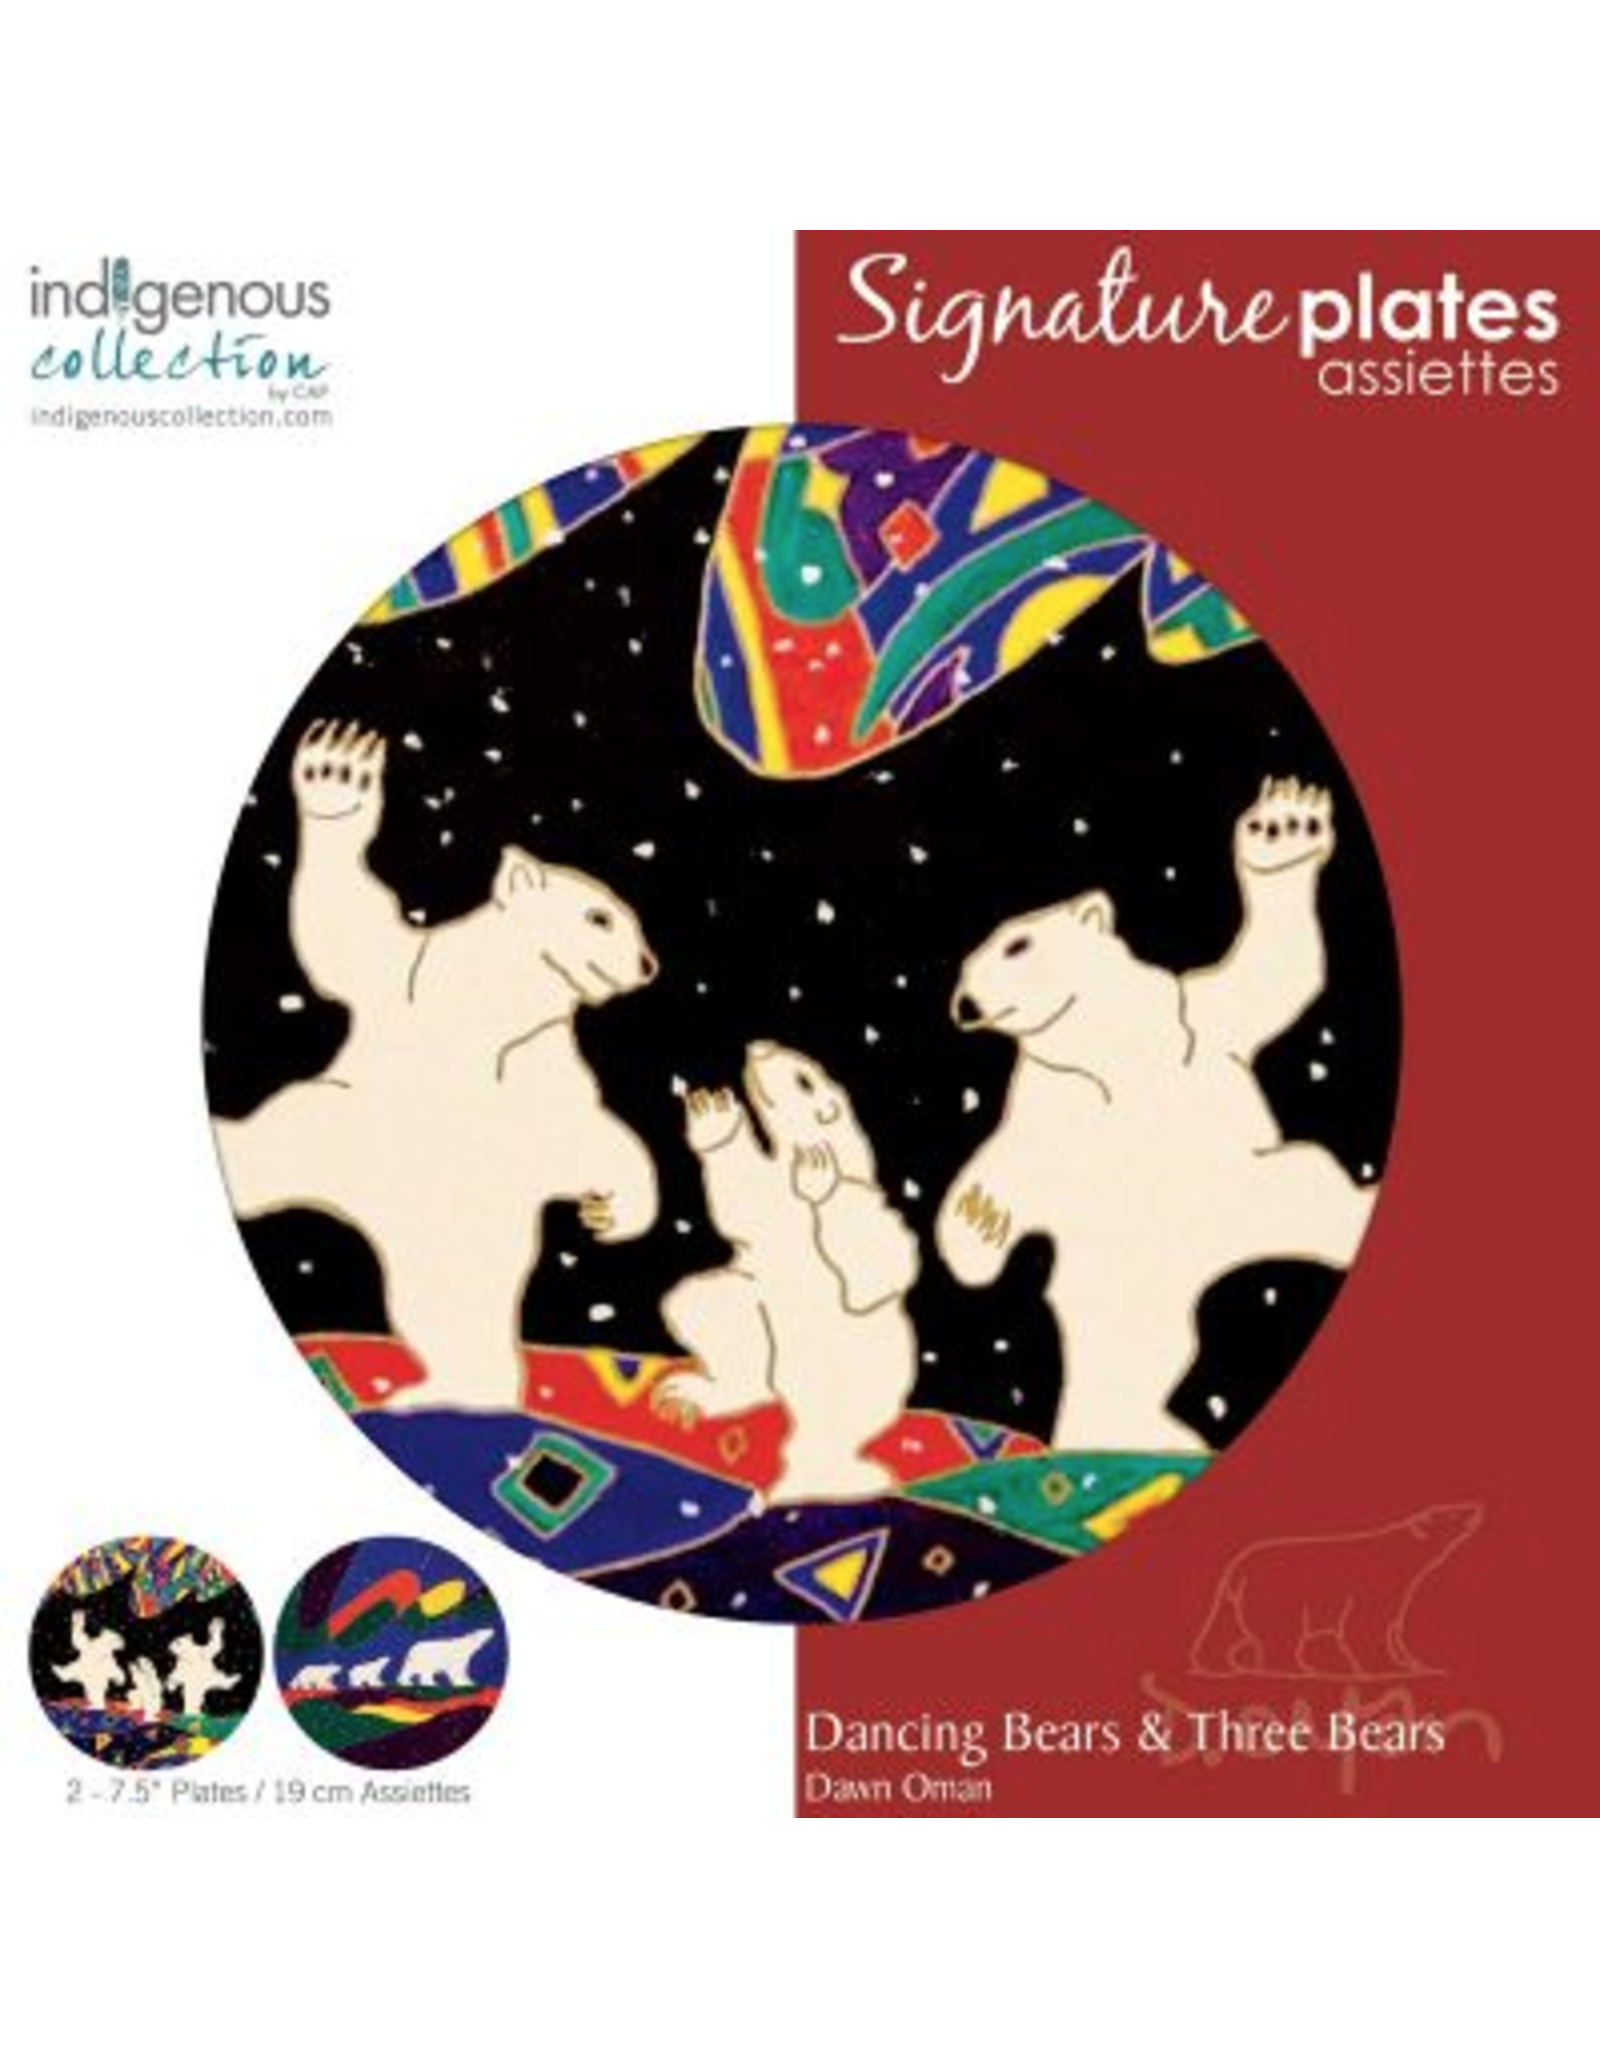 Assiette Dancing Bears et Three Bears par Dawn Oman - PLTS10